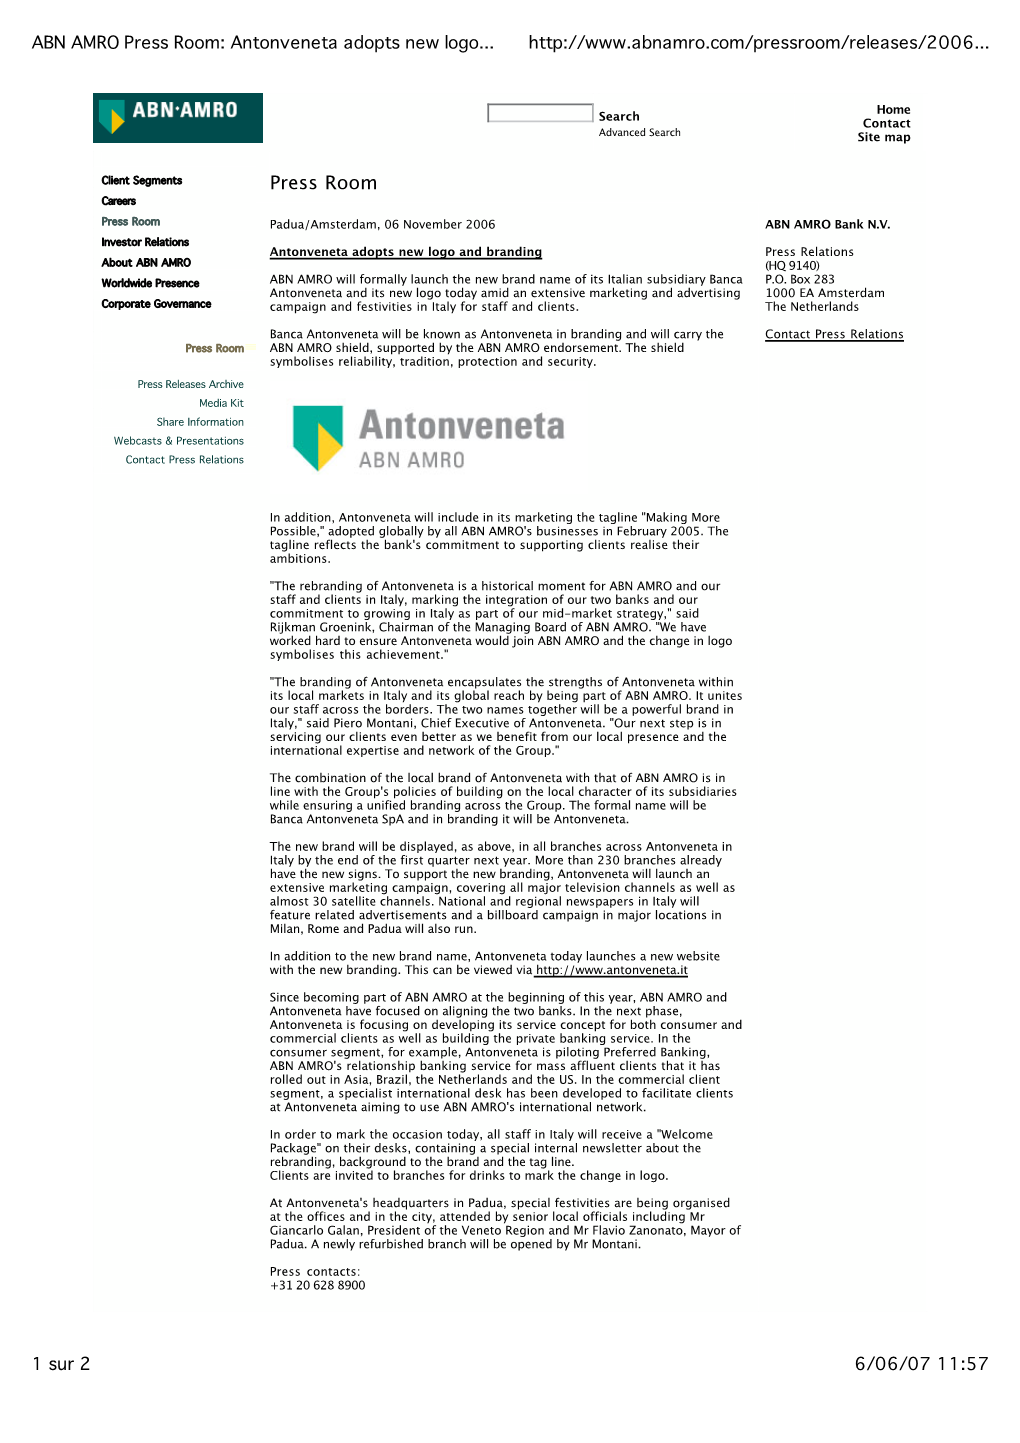 ABN AMRO Press Room: Antonveneta Adopts New Logo and Branding